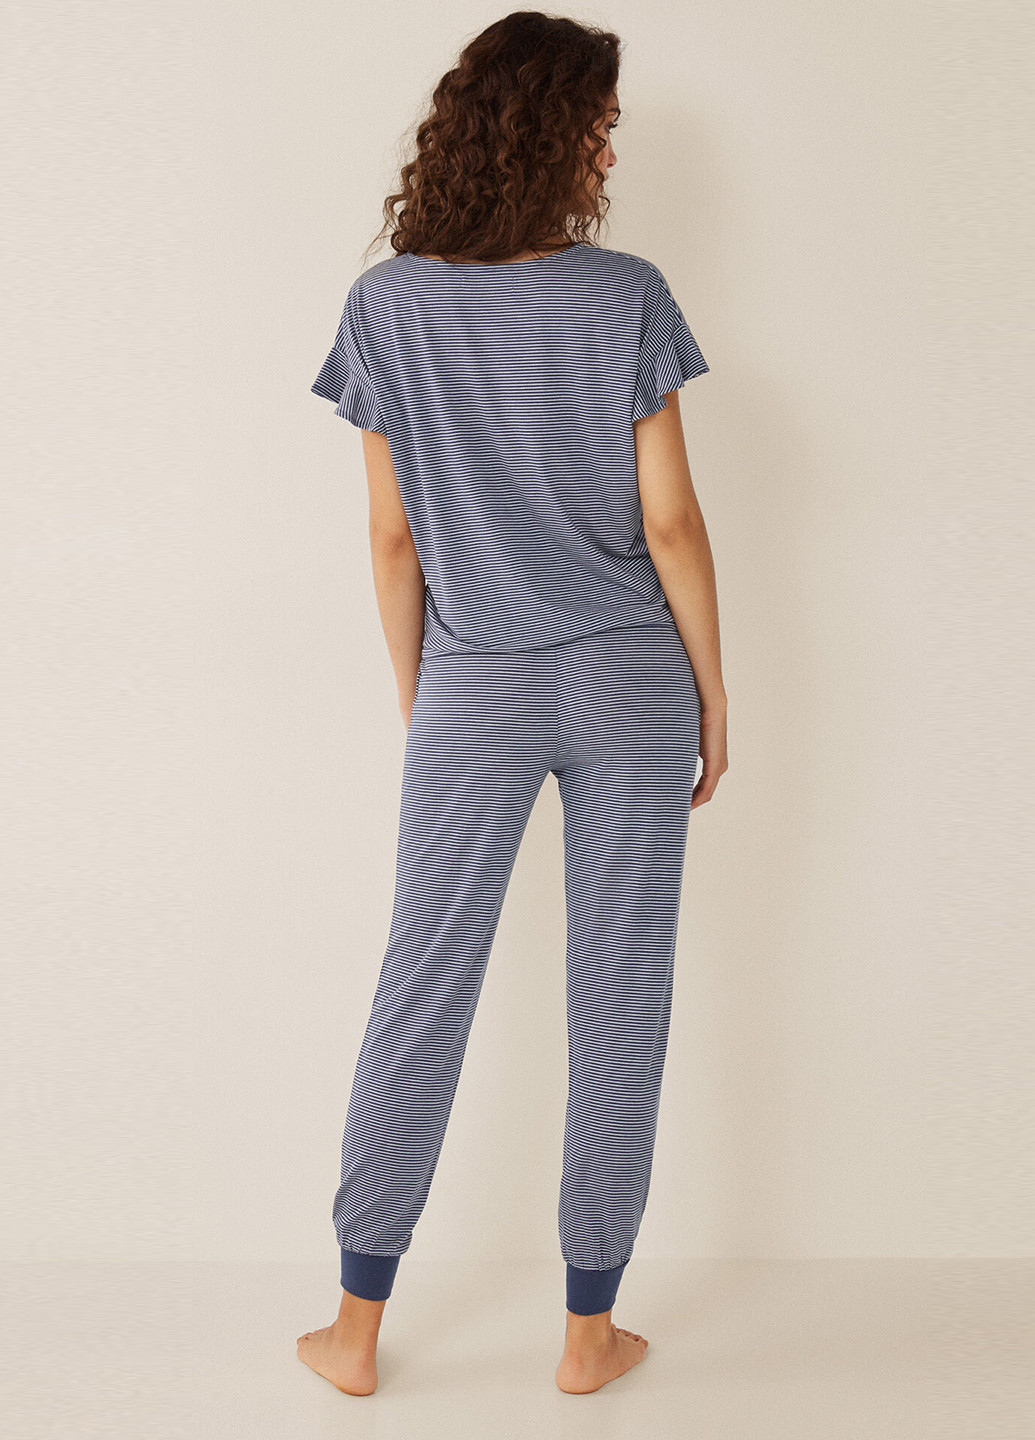 Синяя всесезон пижама (футболка, брюки) футболка + шорты Women'secret